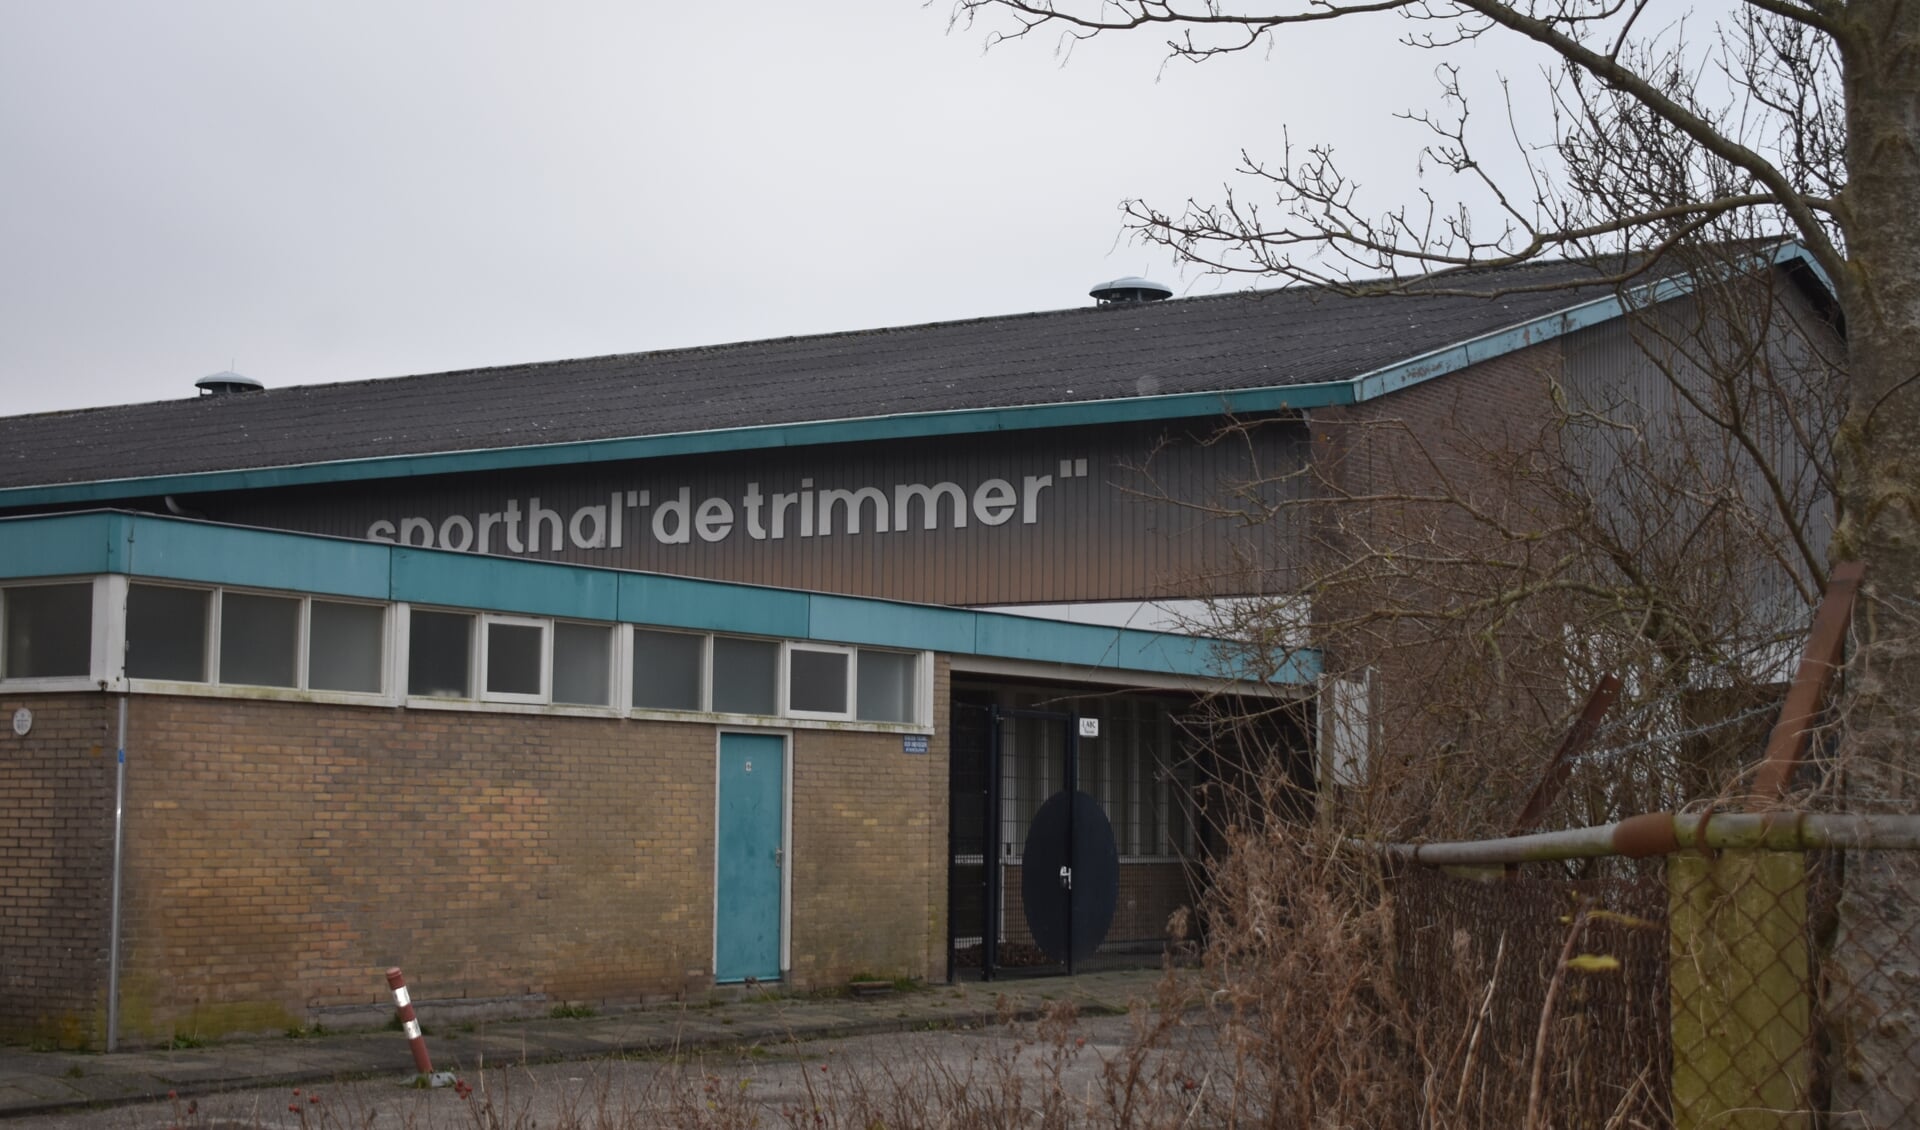 Sporthal De Trimmer in het Harddraverspark in Dokkum.